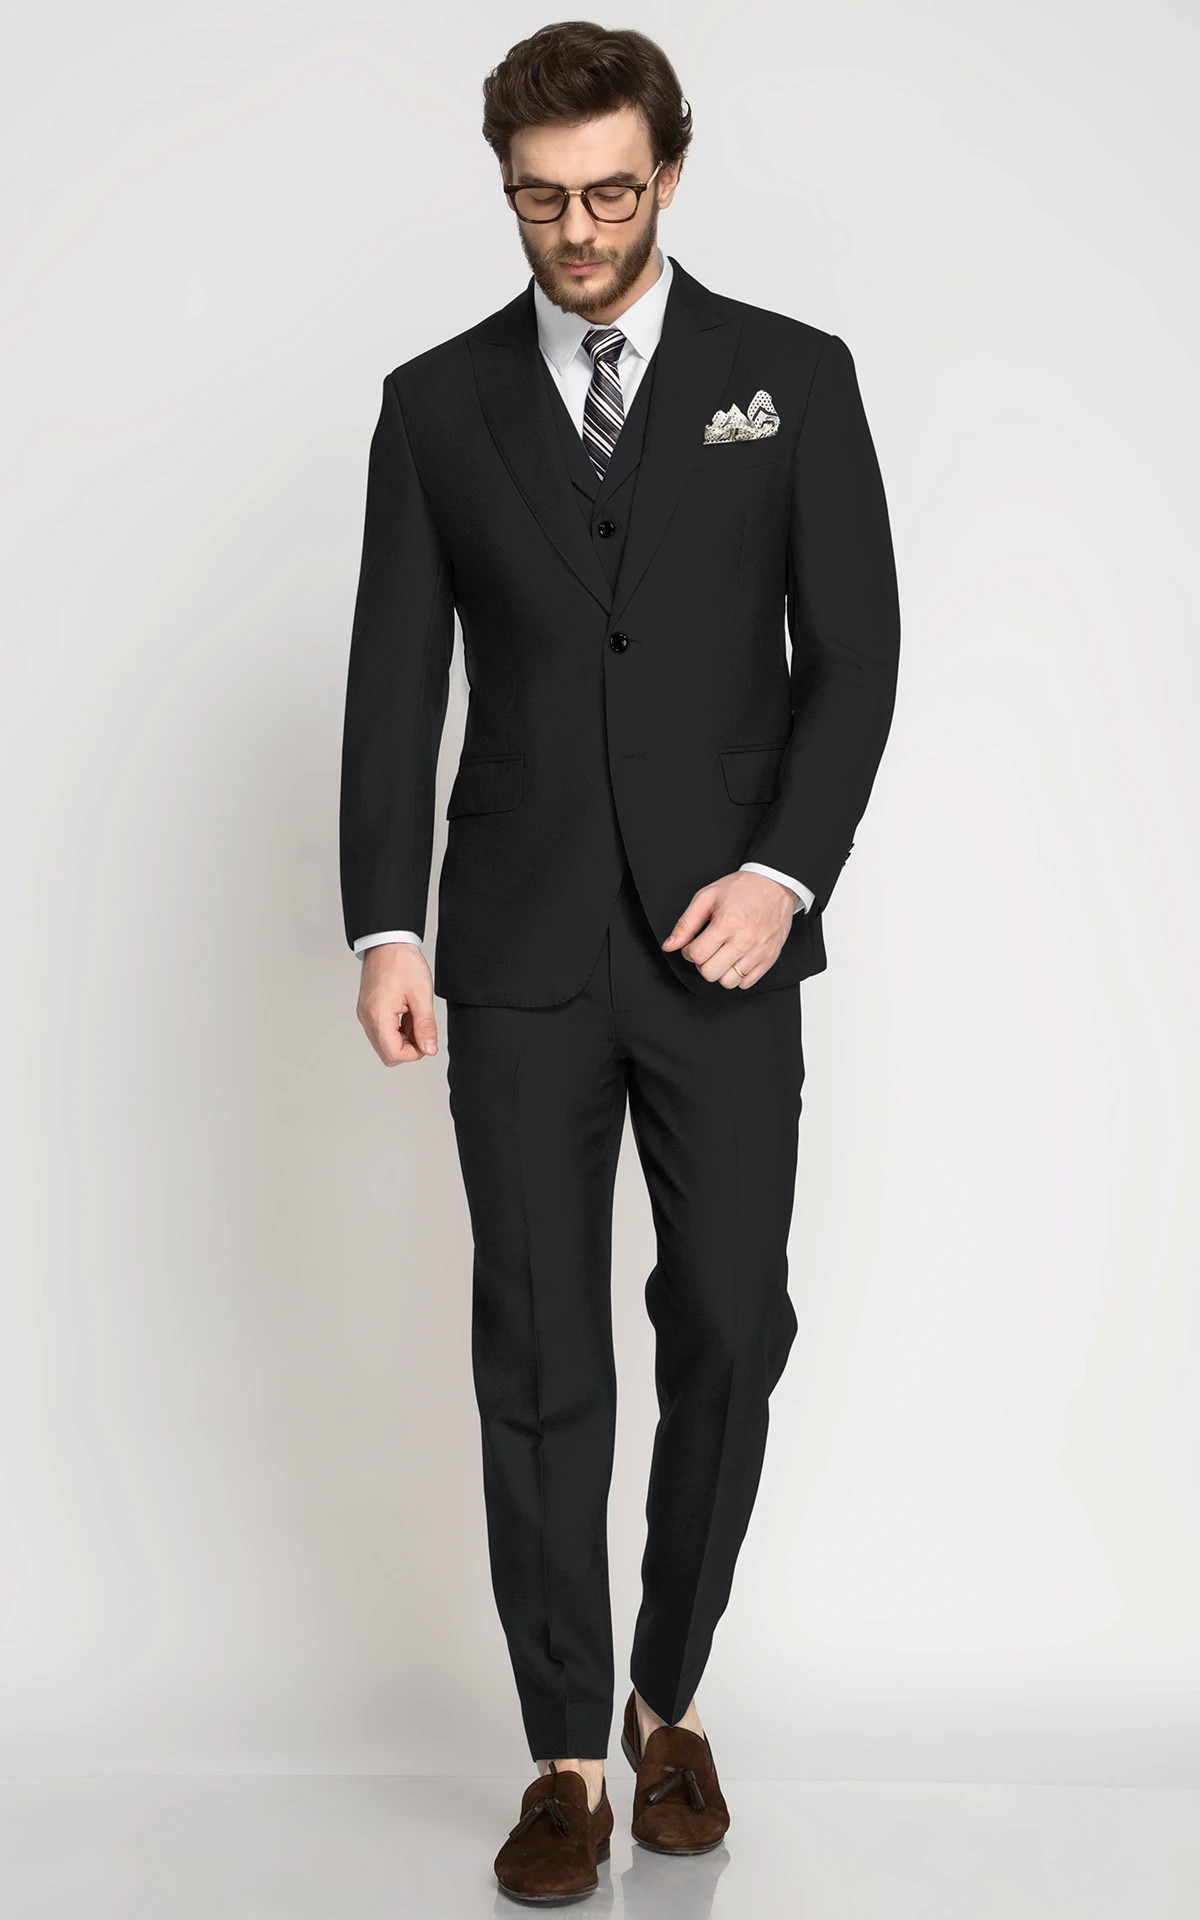 Custom Suits For Men